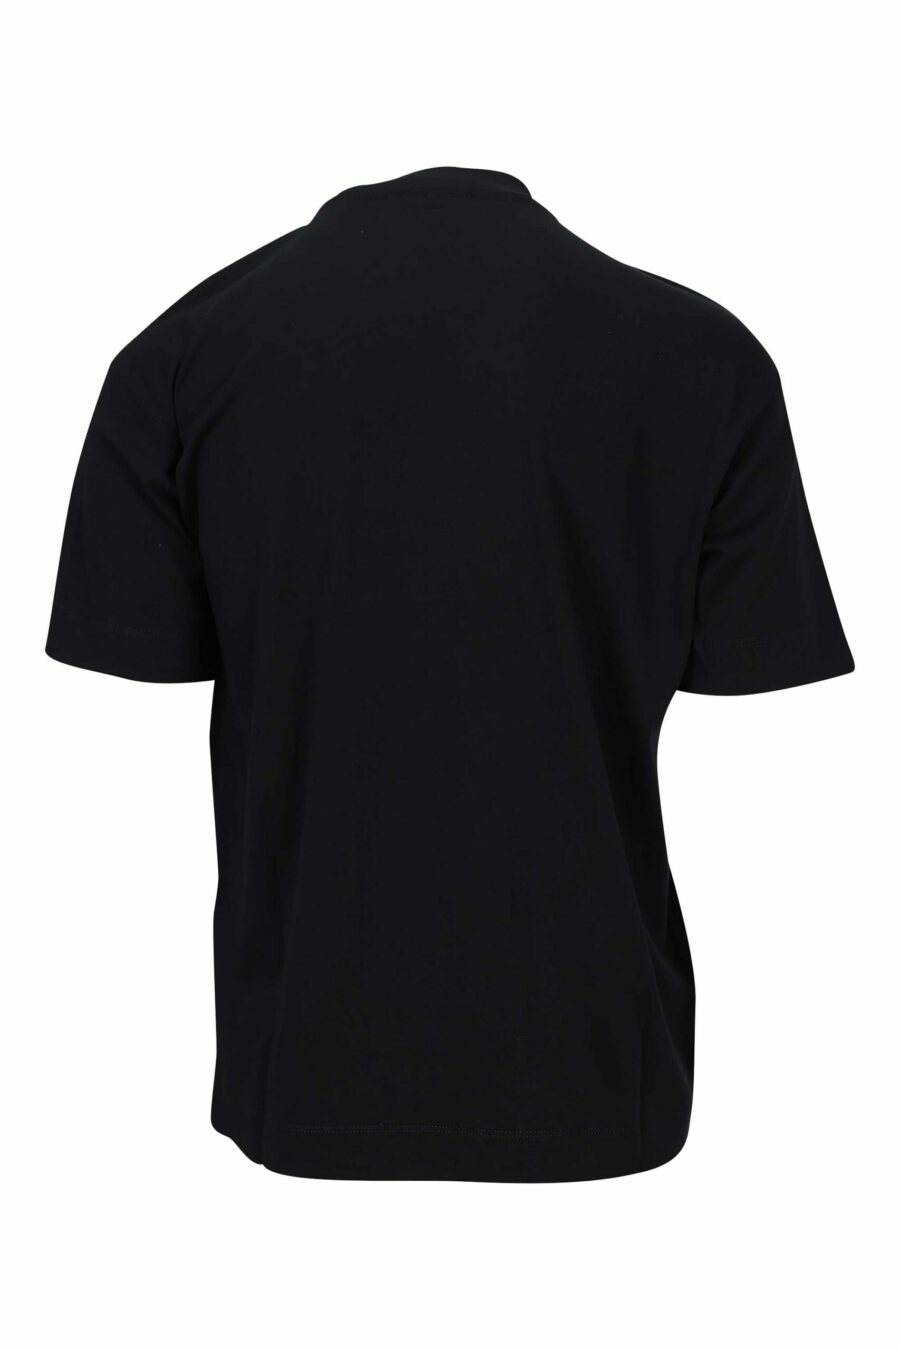 T-shirt noir avec maxilogo aigle monochrome - 8057970432920 1 scaled